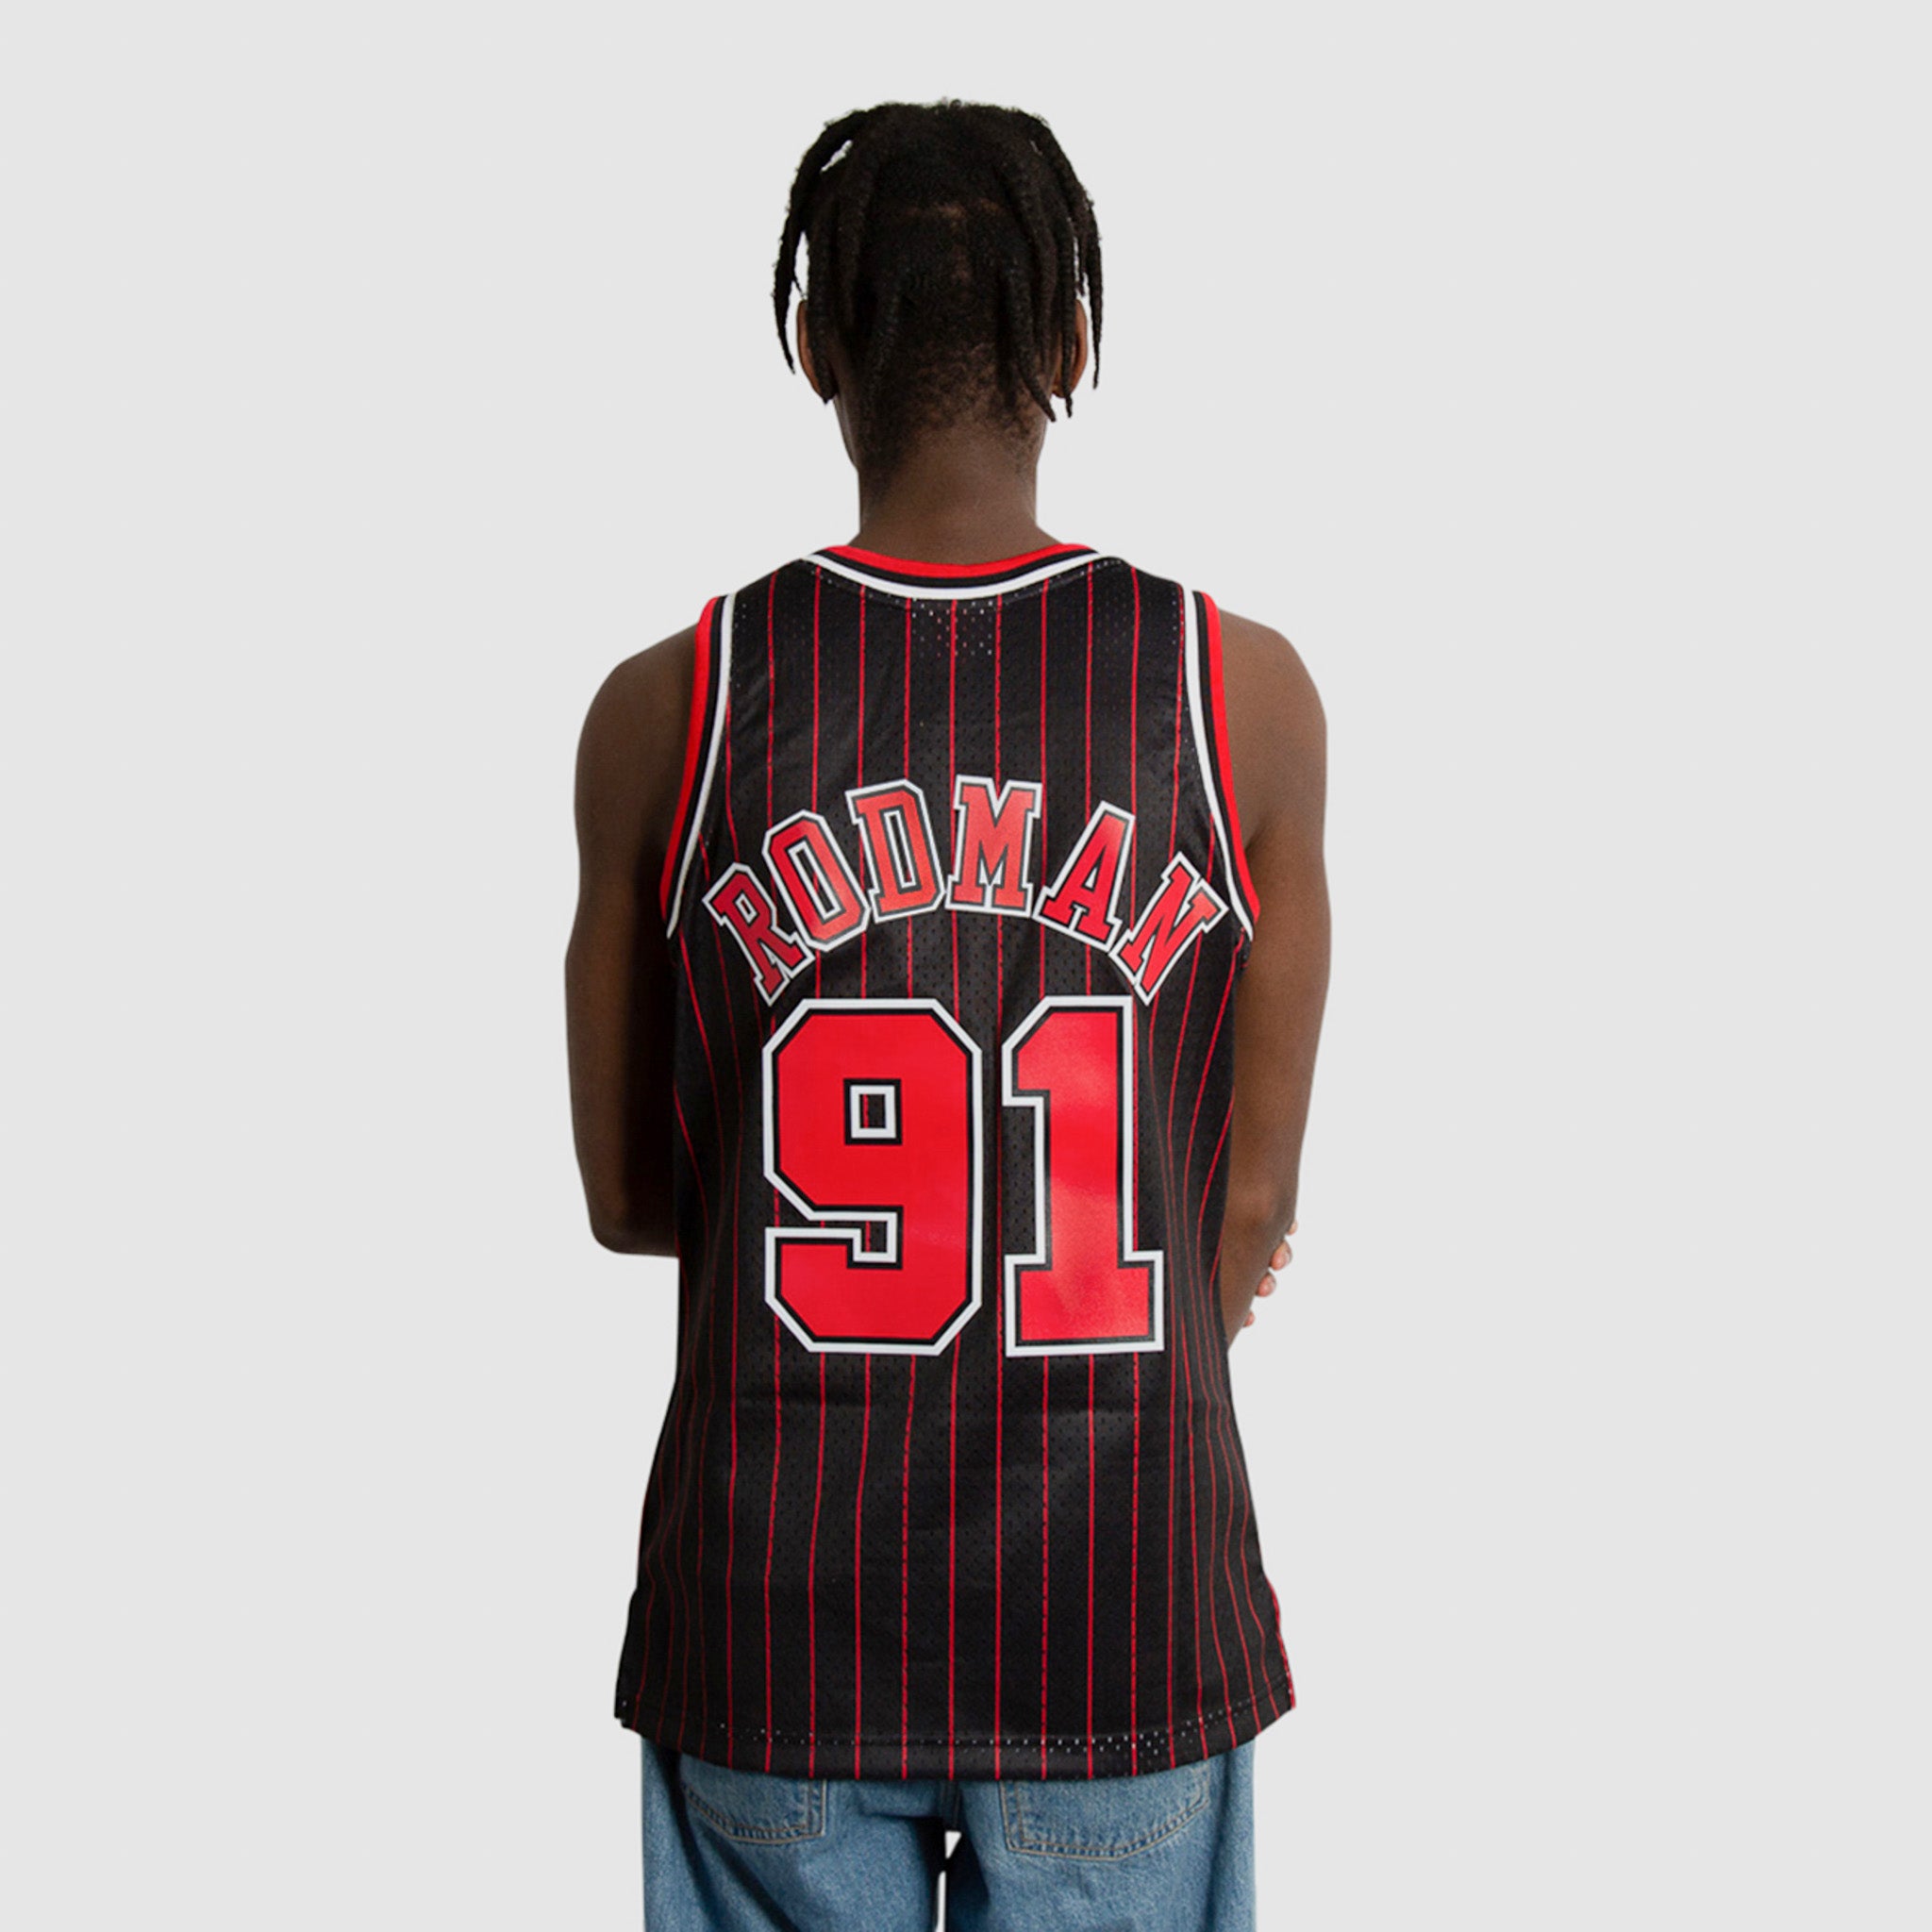 NBA_ College Wears Men's #91 Dennis Rodman Jersey #33 Scottie